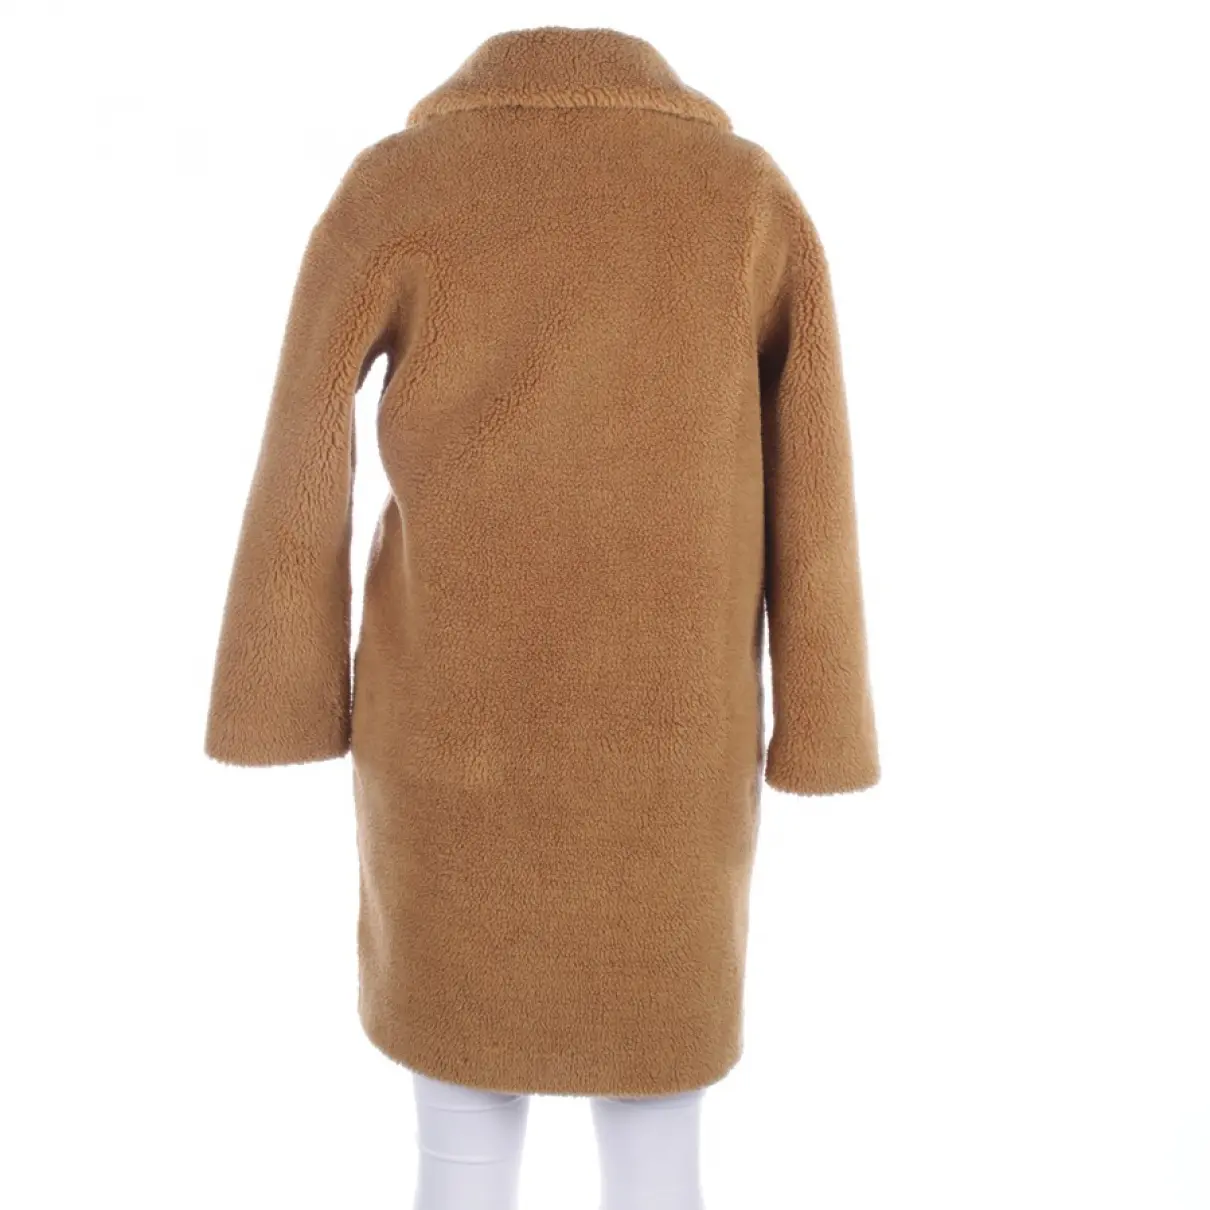 Buy Stand studio Wool jacket online